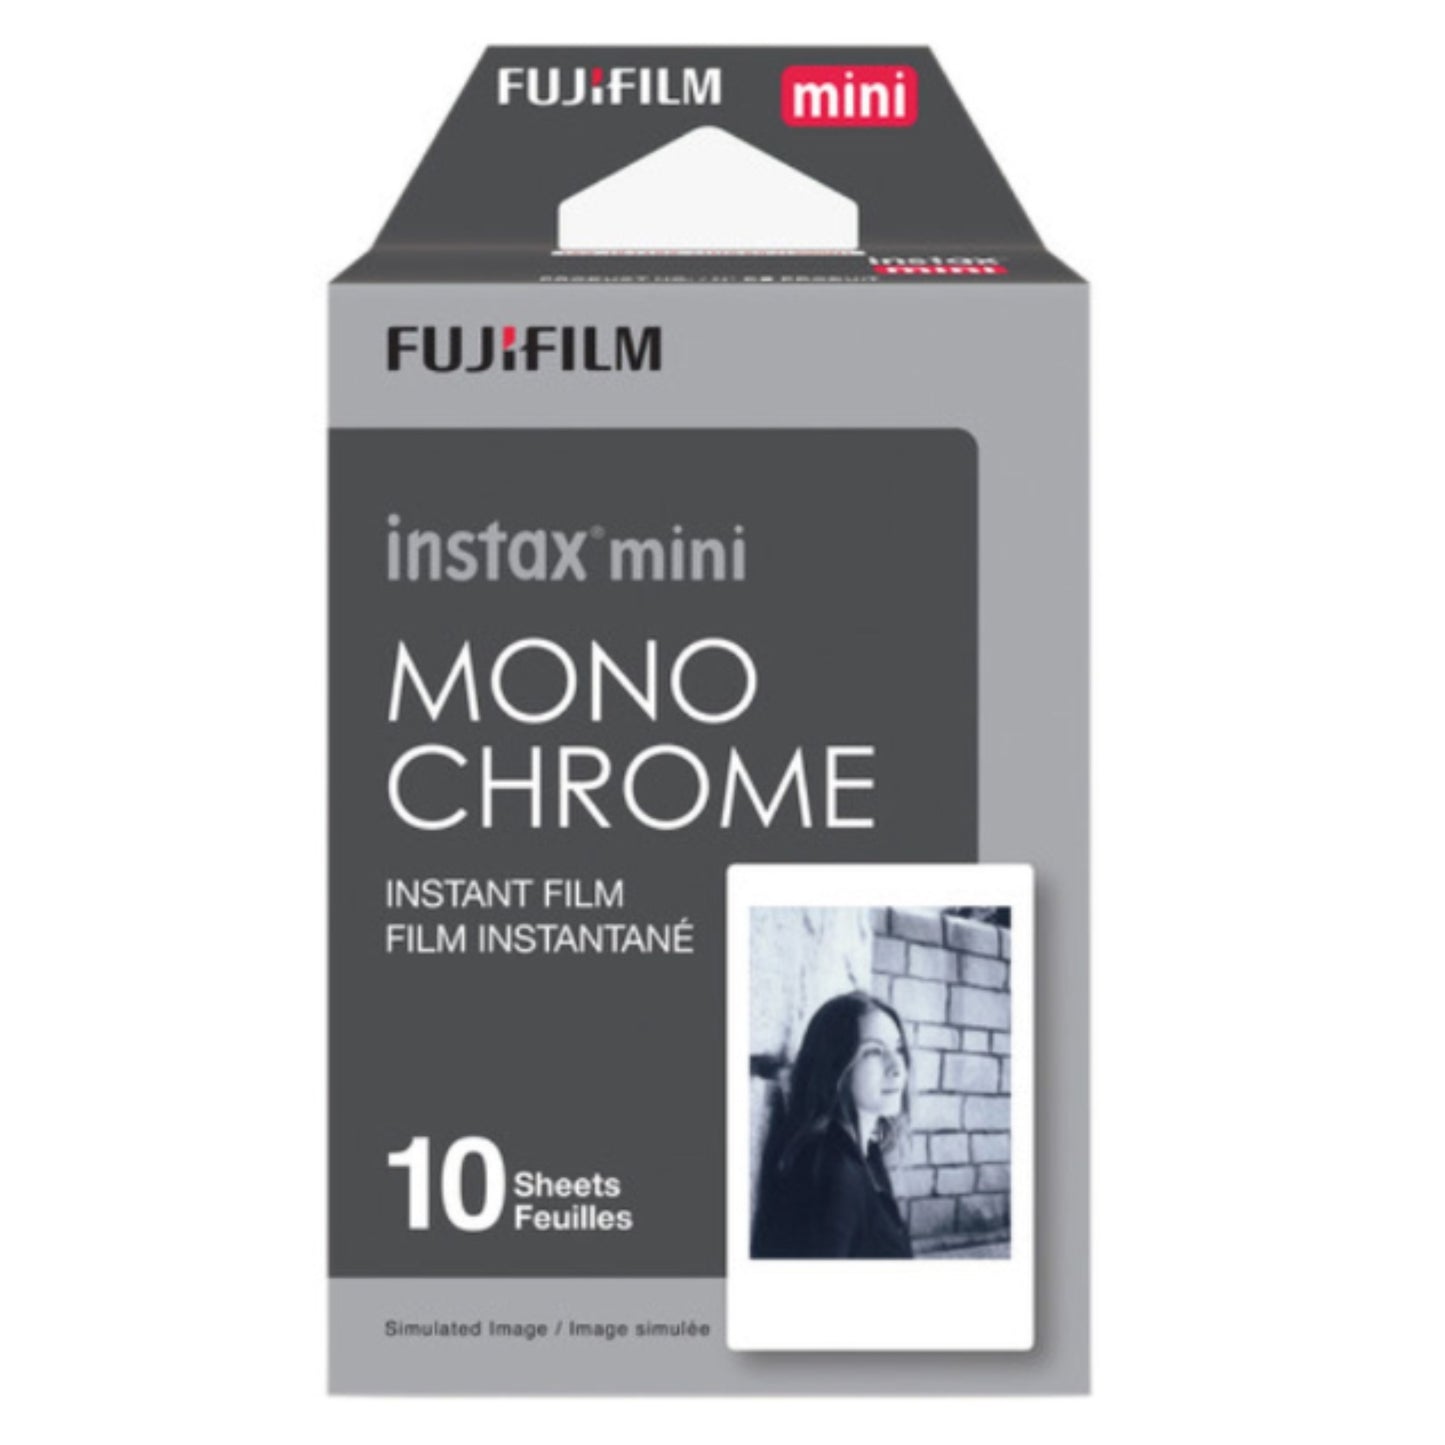 A packs of 10 Fujifilm's Instax Mini instant film featuring classic monochrome film